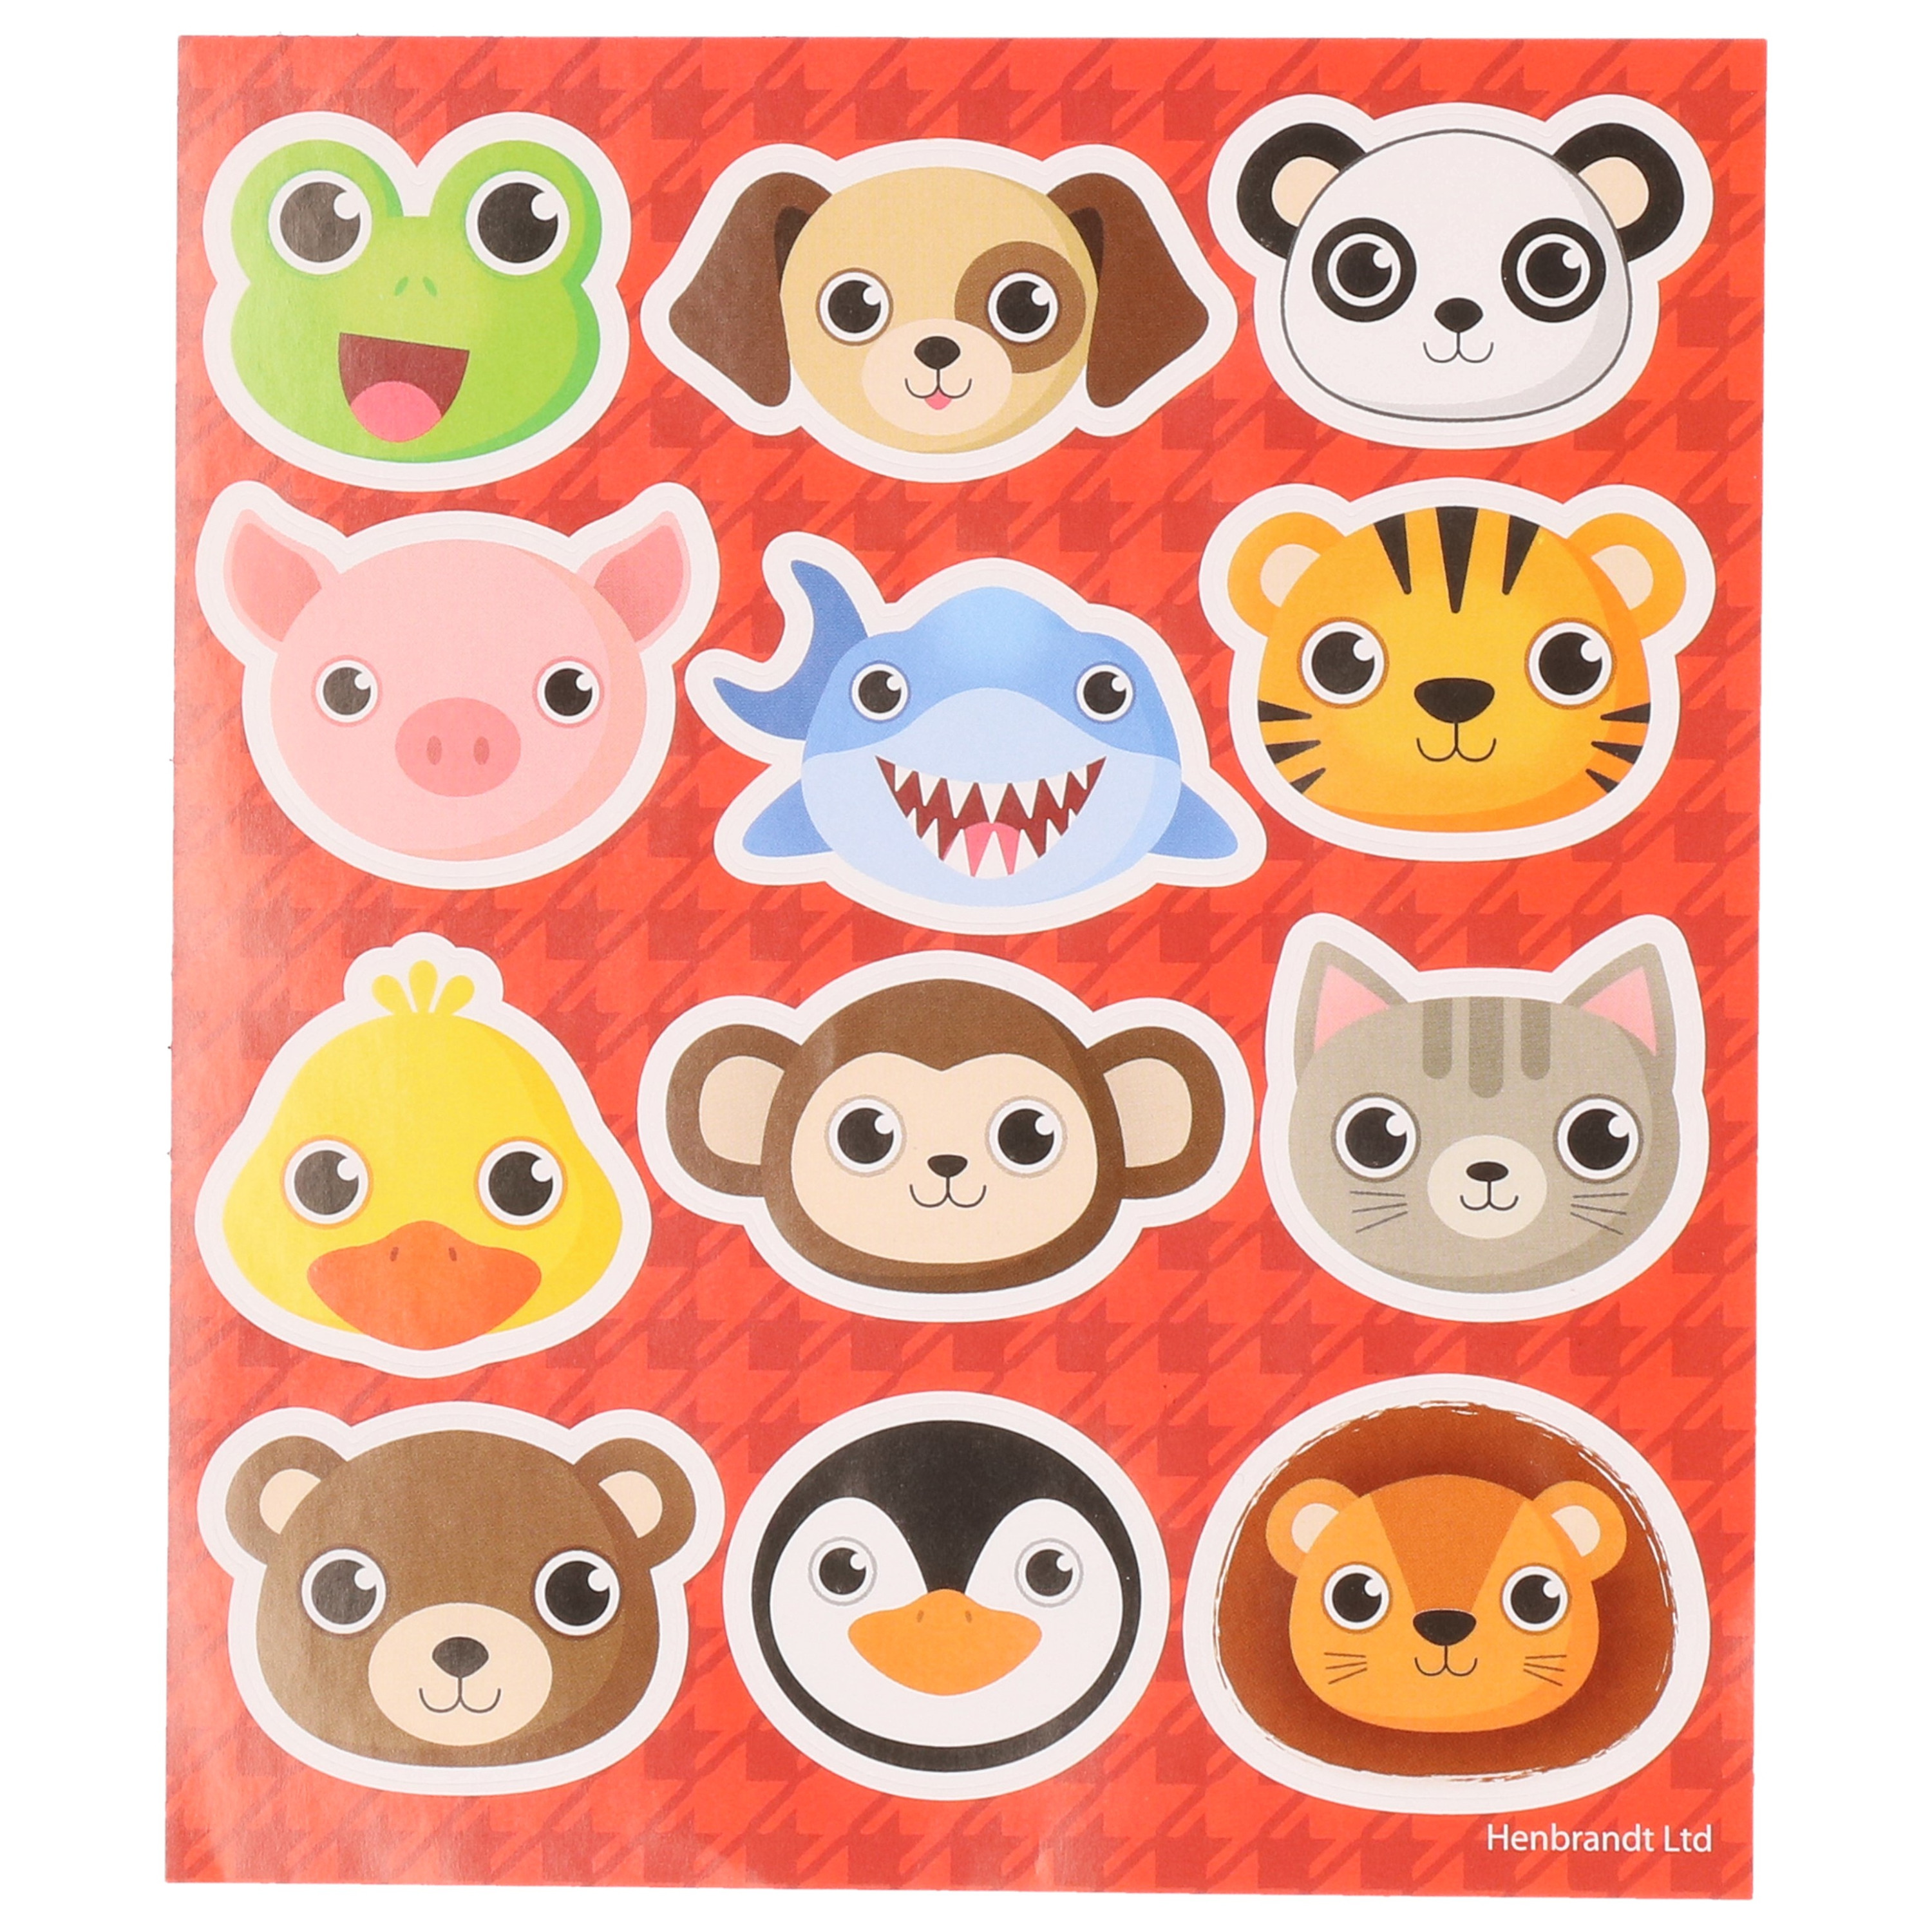 3x Velletjes agenda-dagboek-fun kinder dieren stickers 12 dieren per velletje van 10 x 12 cm